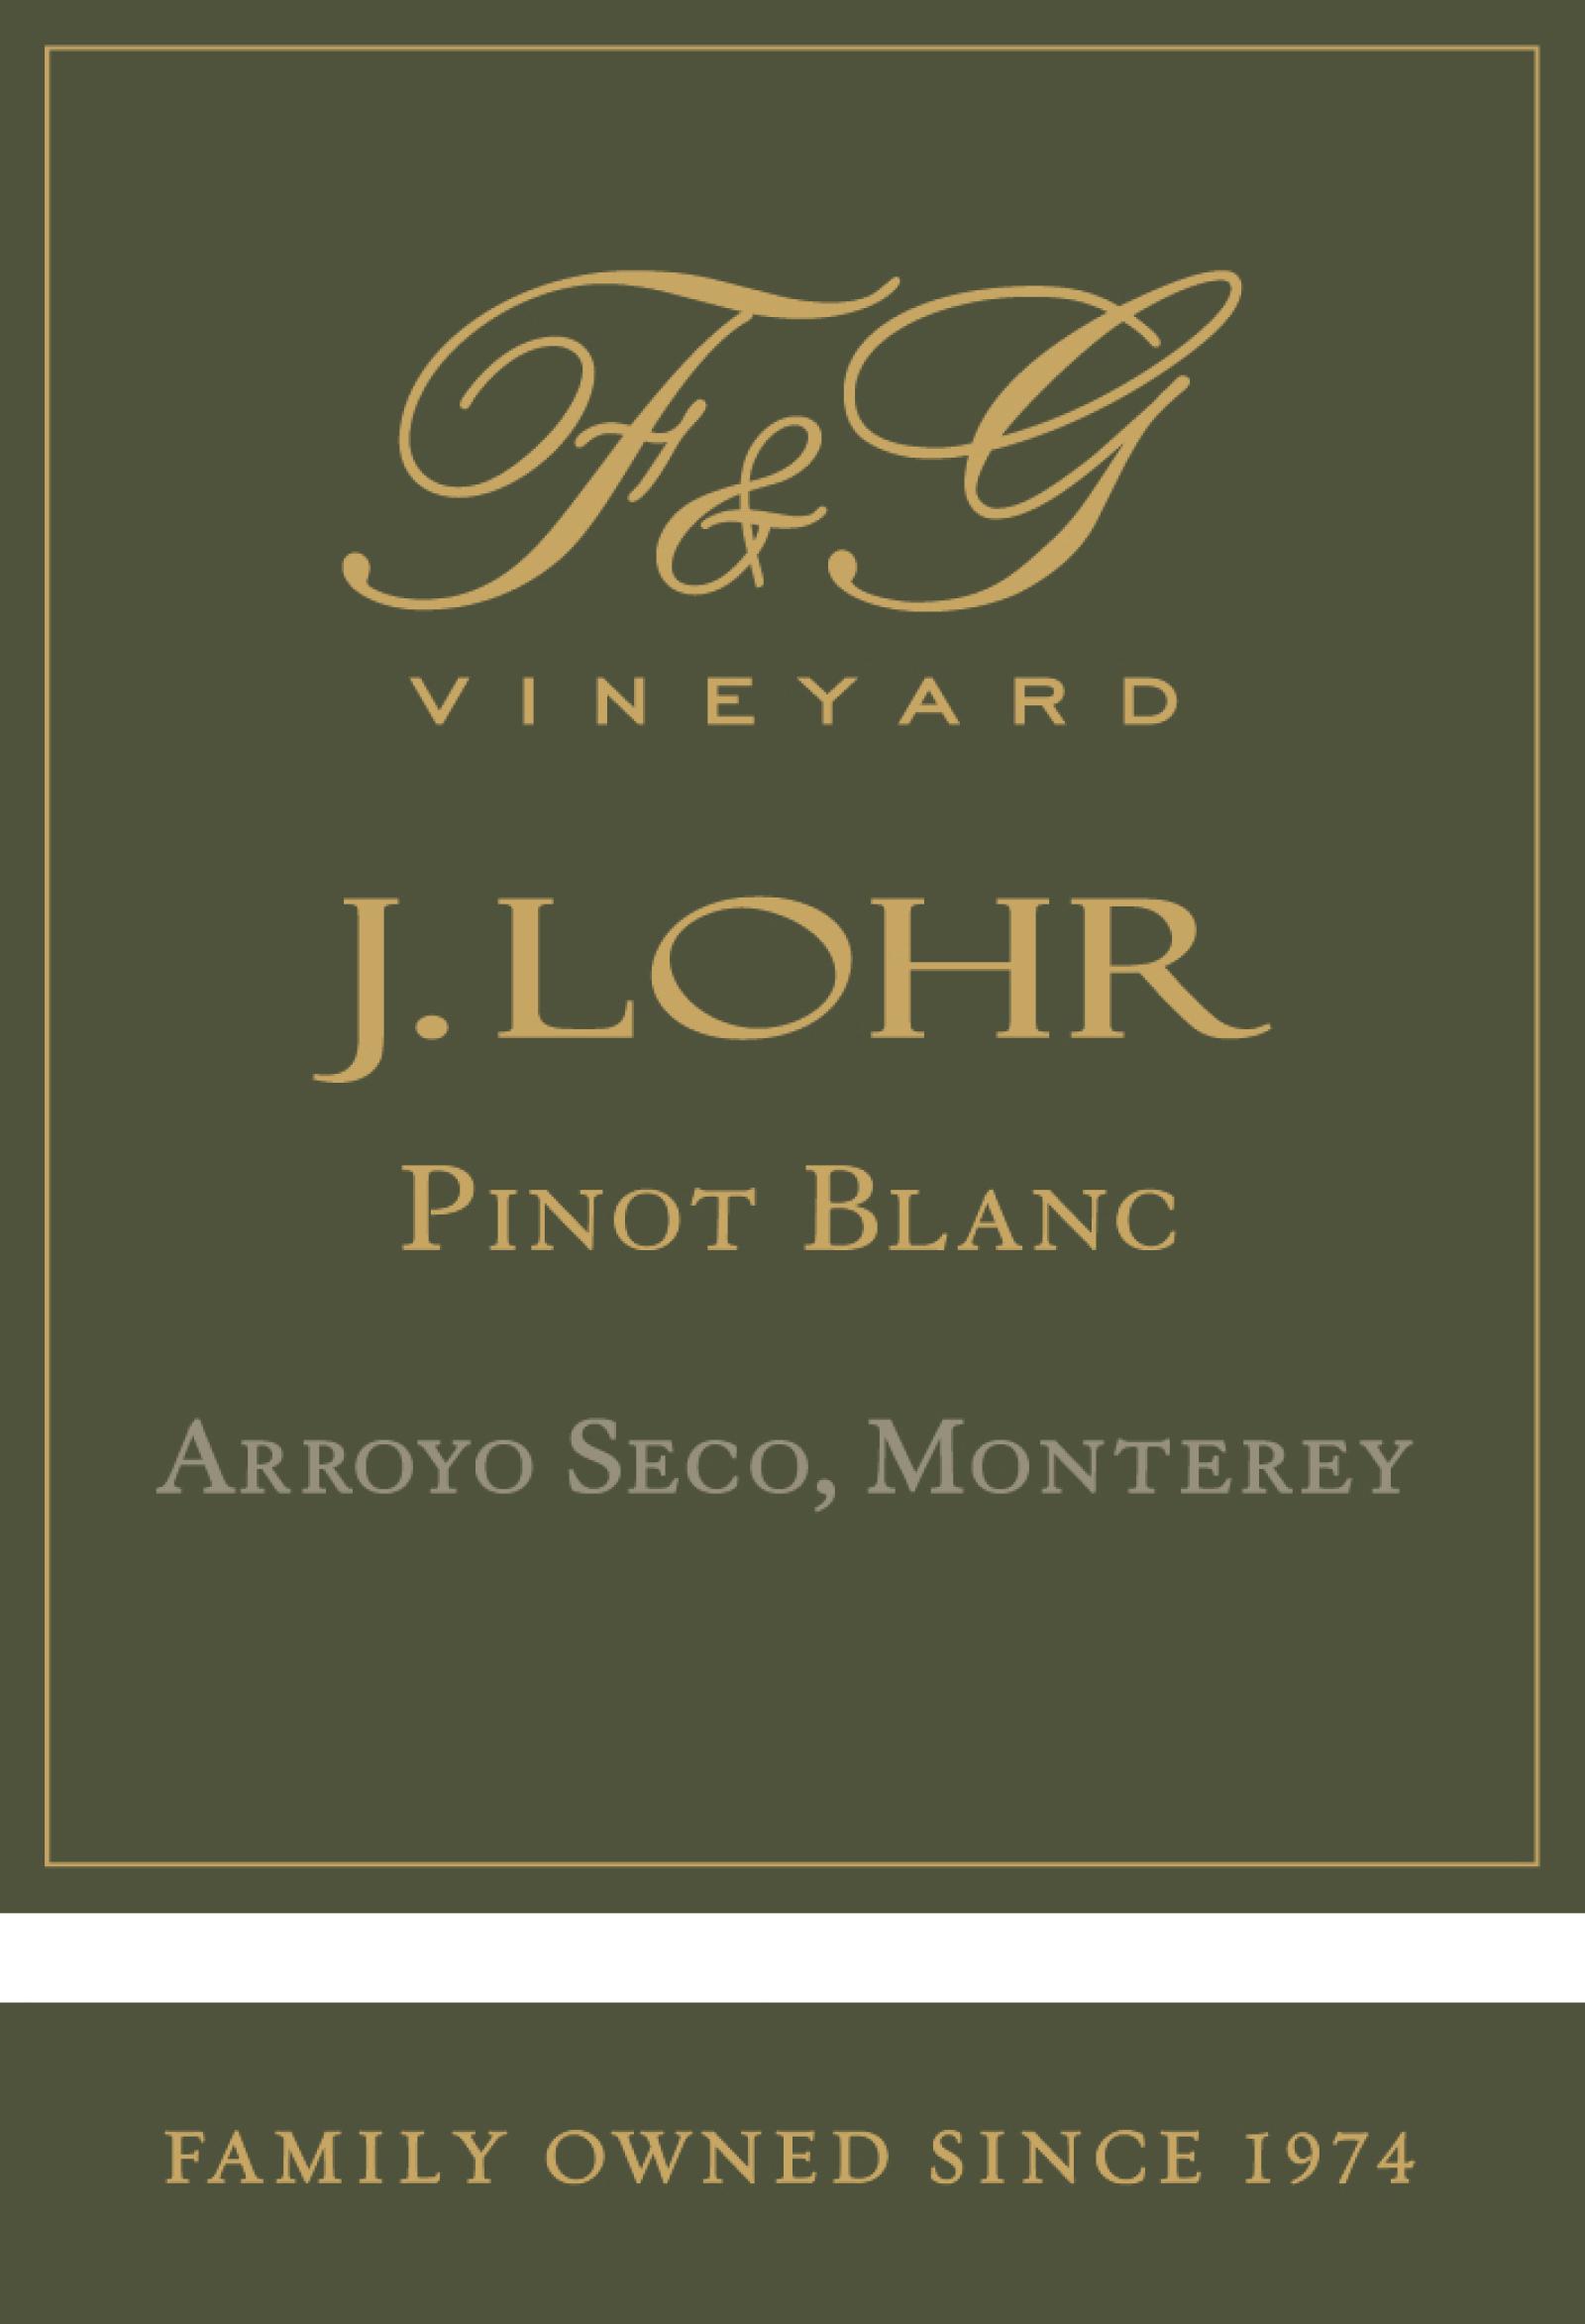 J Lohr F&G Vineyard Pinot Blanc 2020